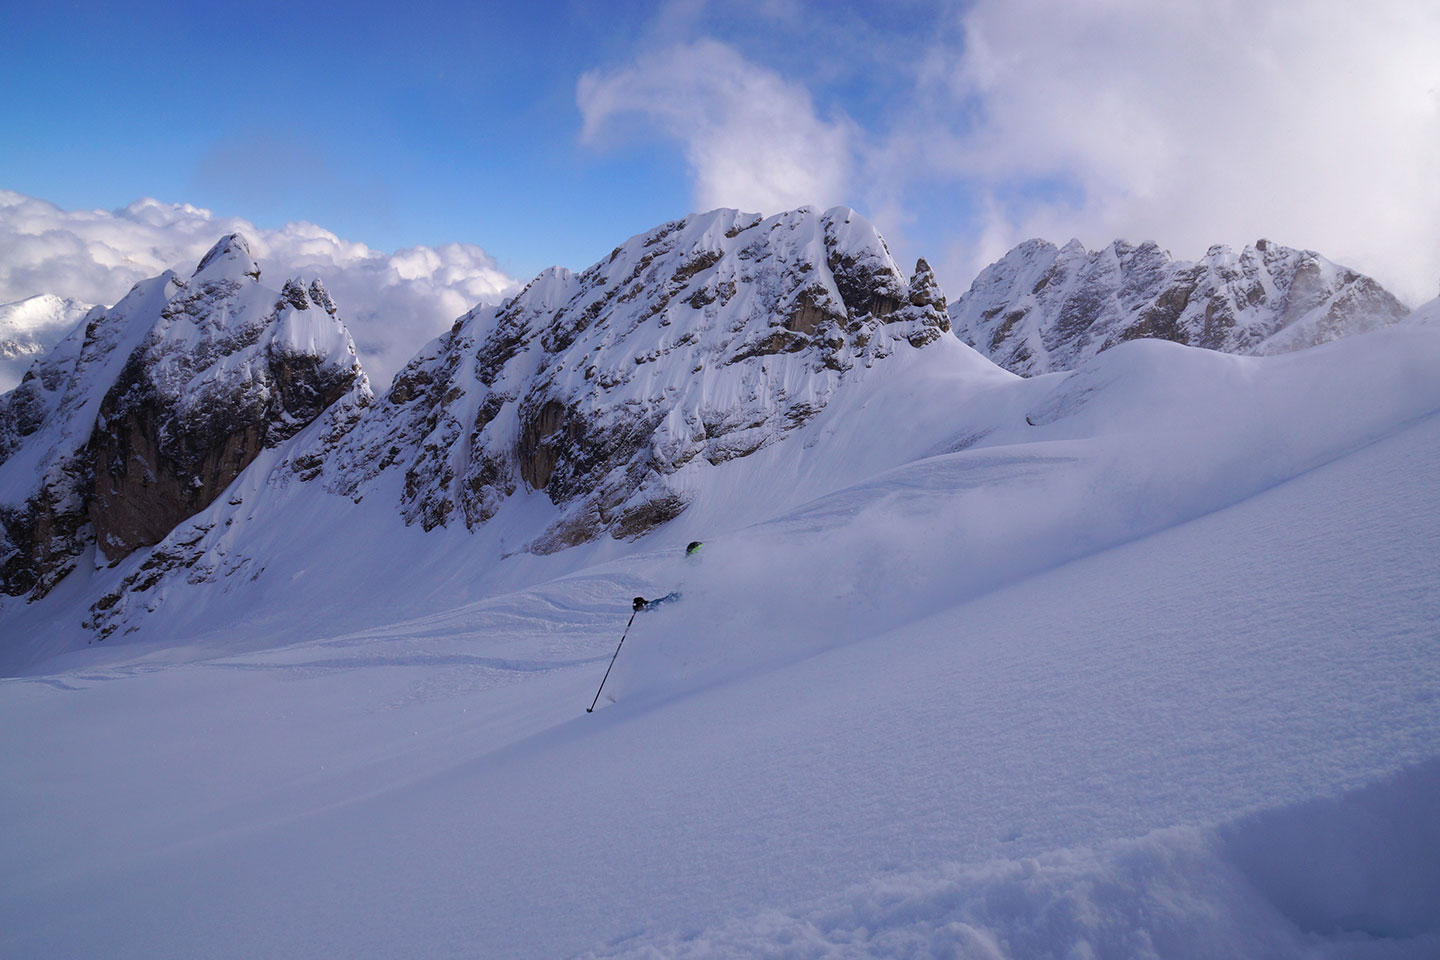 Sci Freeride in Val di Zoldo, Sci Fuoripista nel Dolomiti Superski